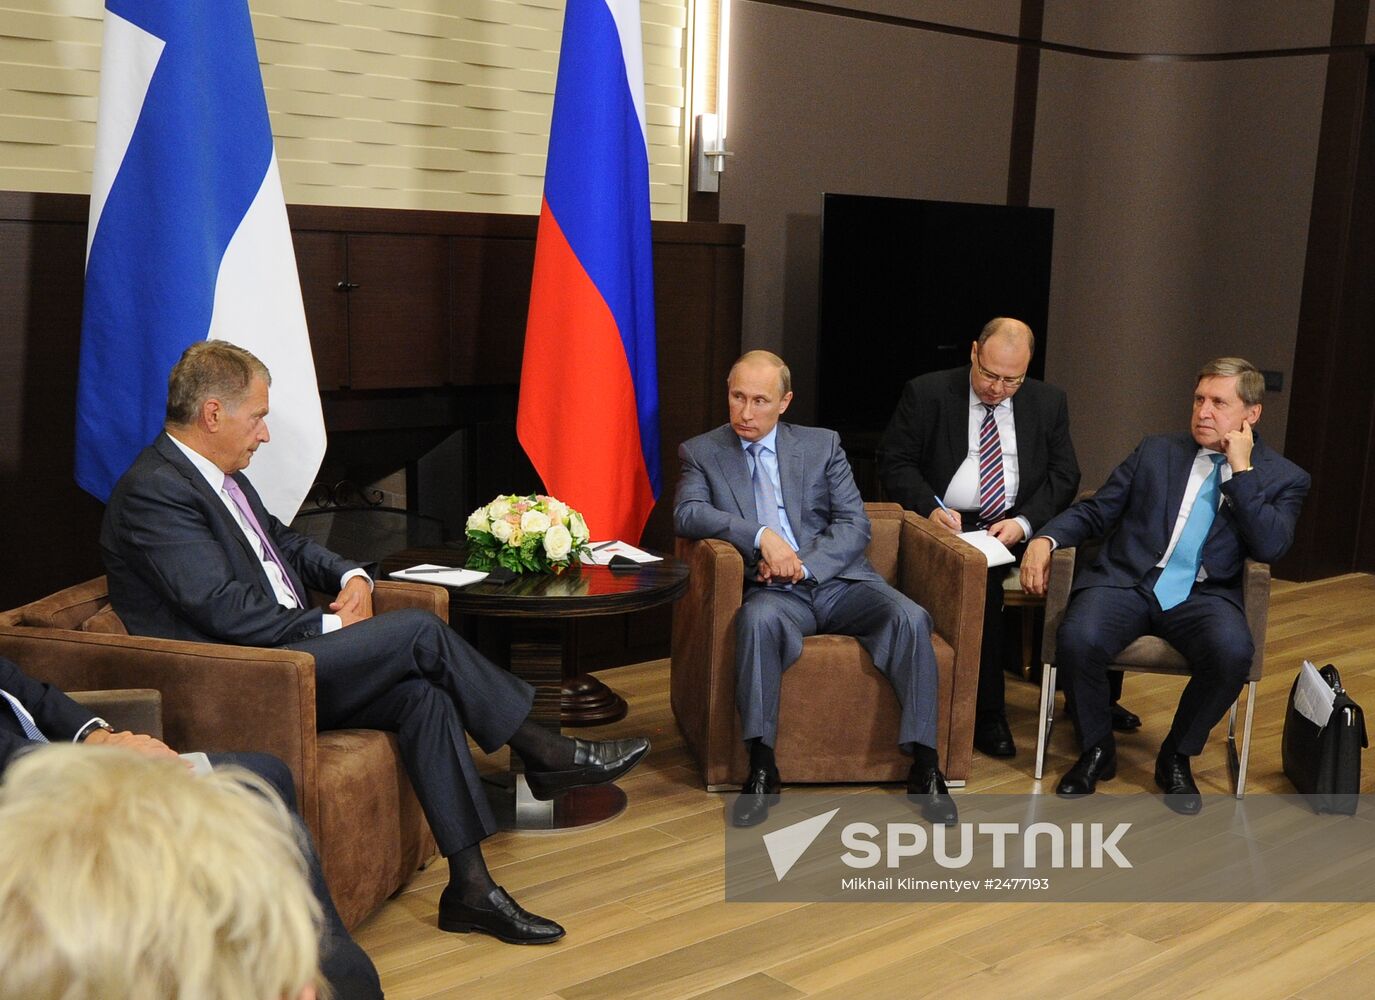 Vladimir Putin meets with President of Finland